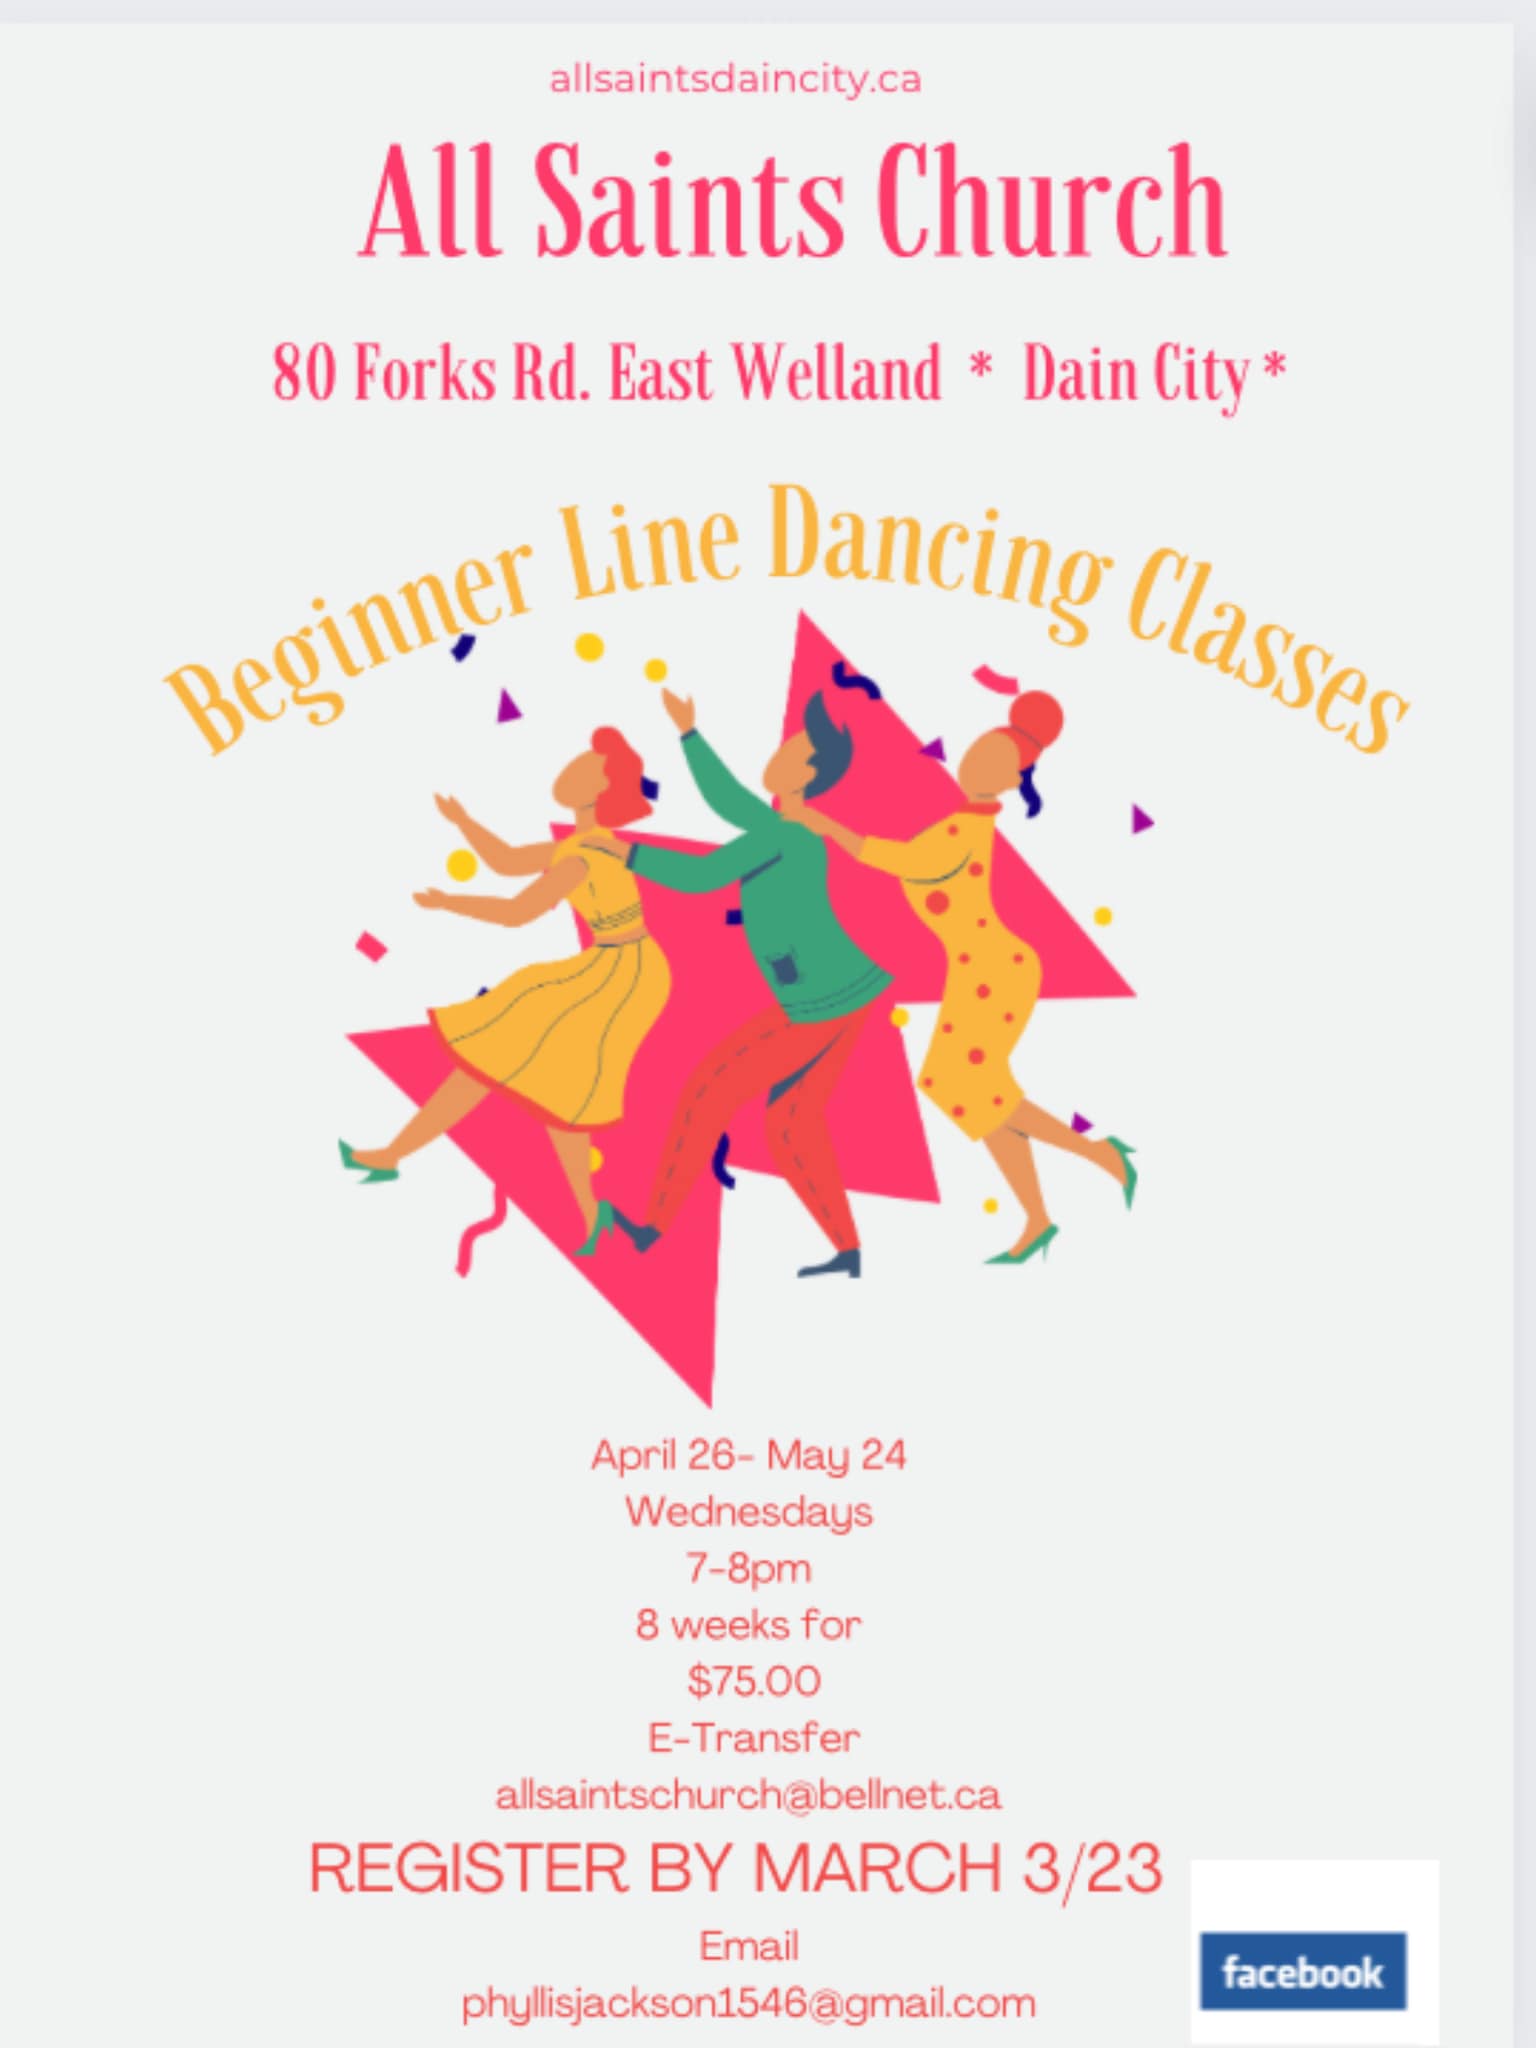 Register Now! Beginner Line Dancing Classes 